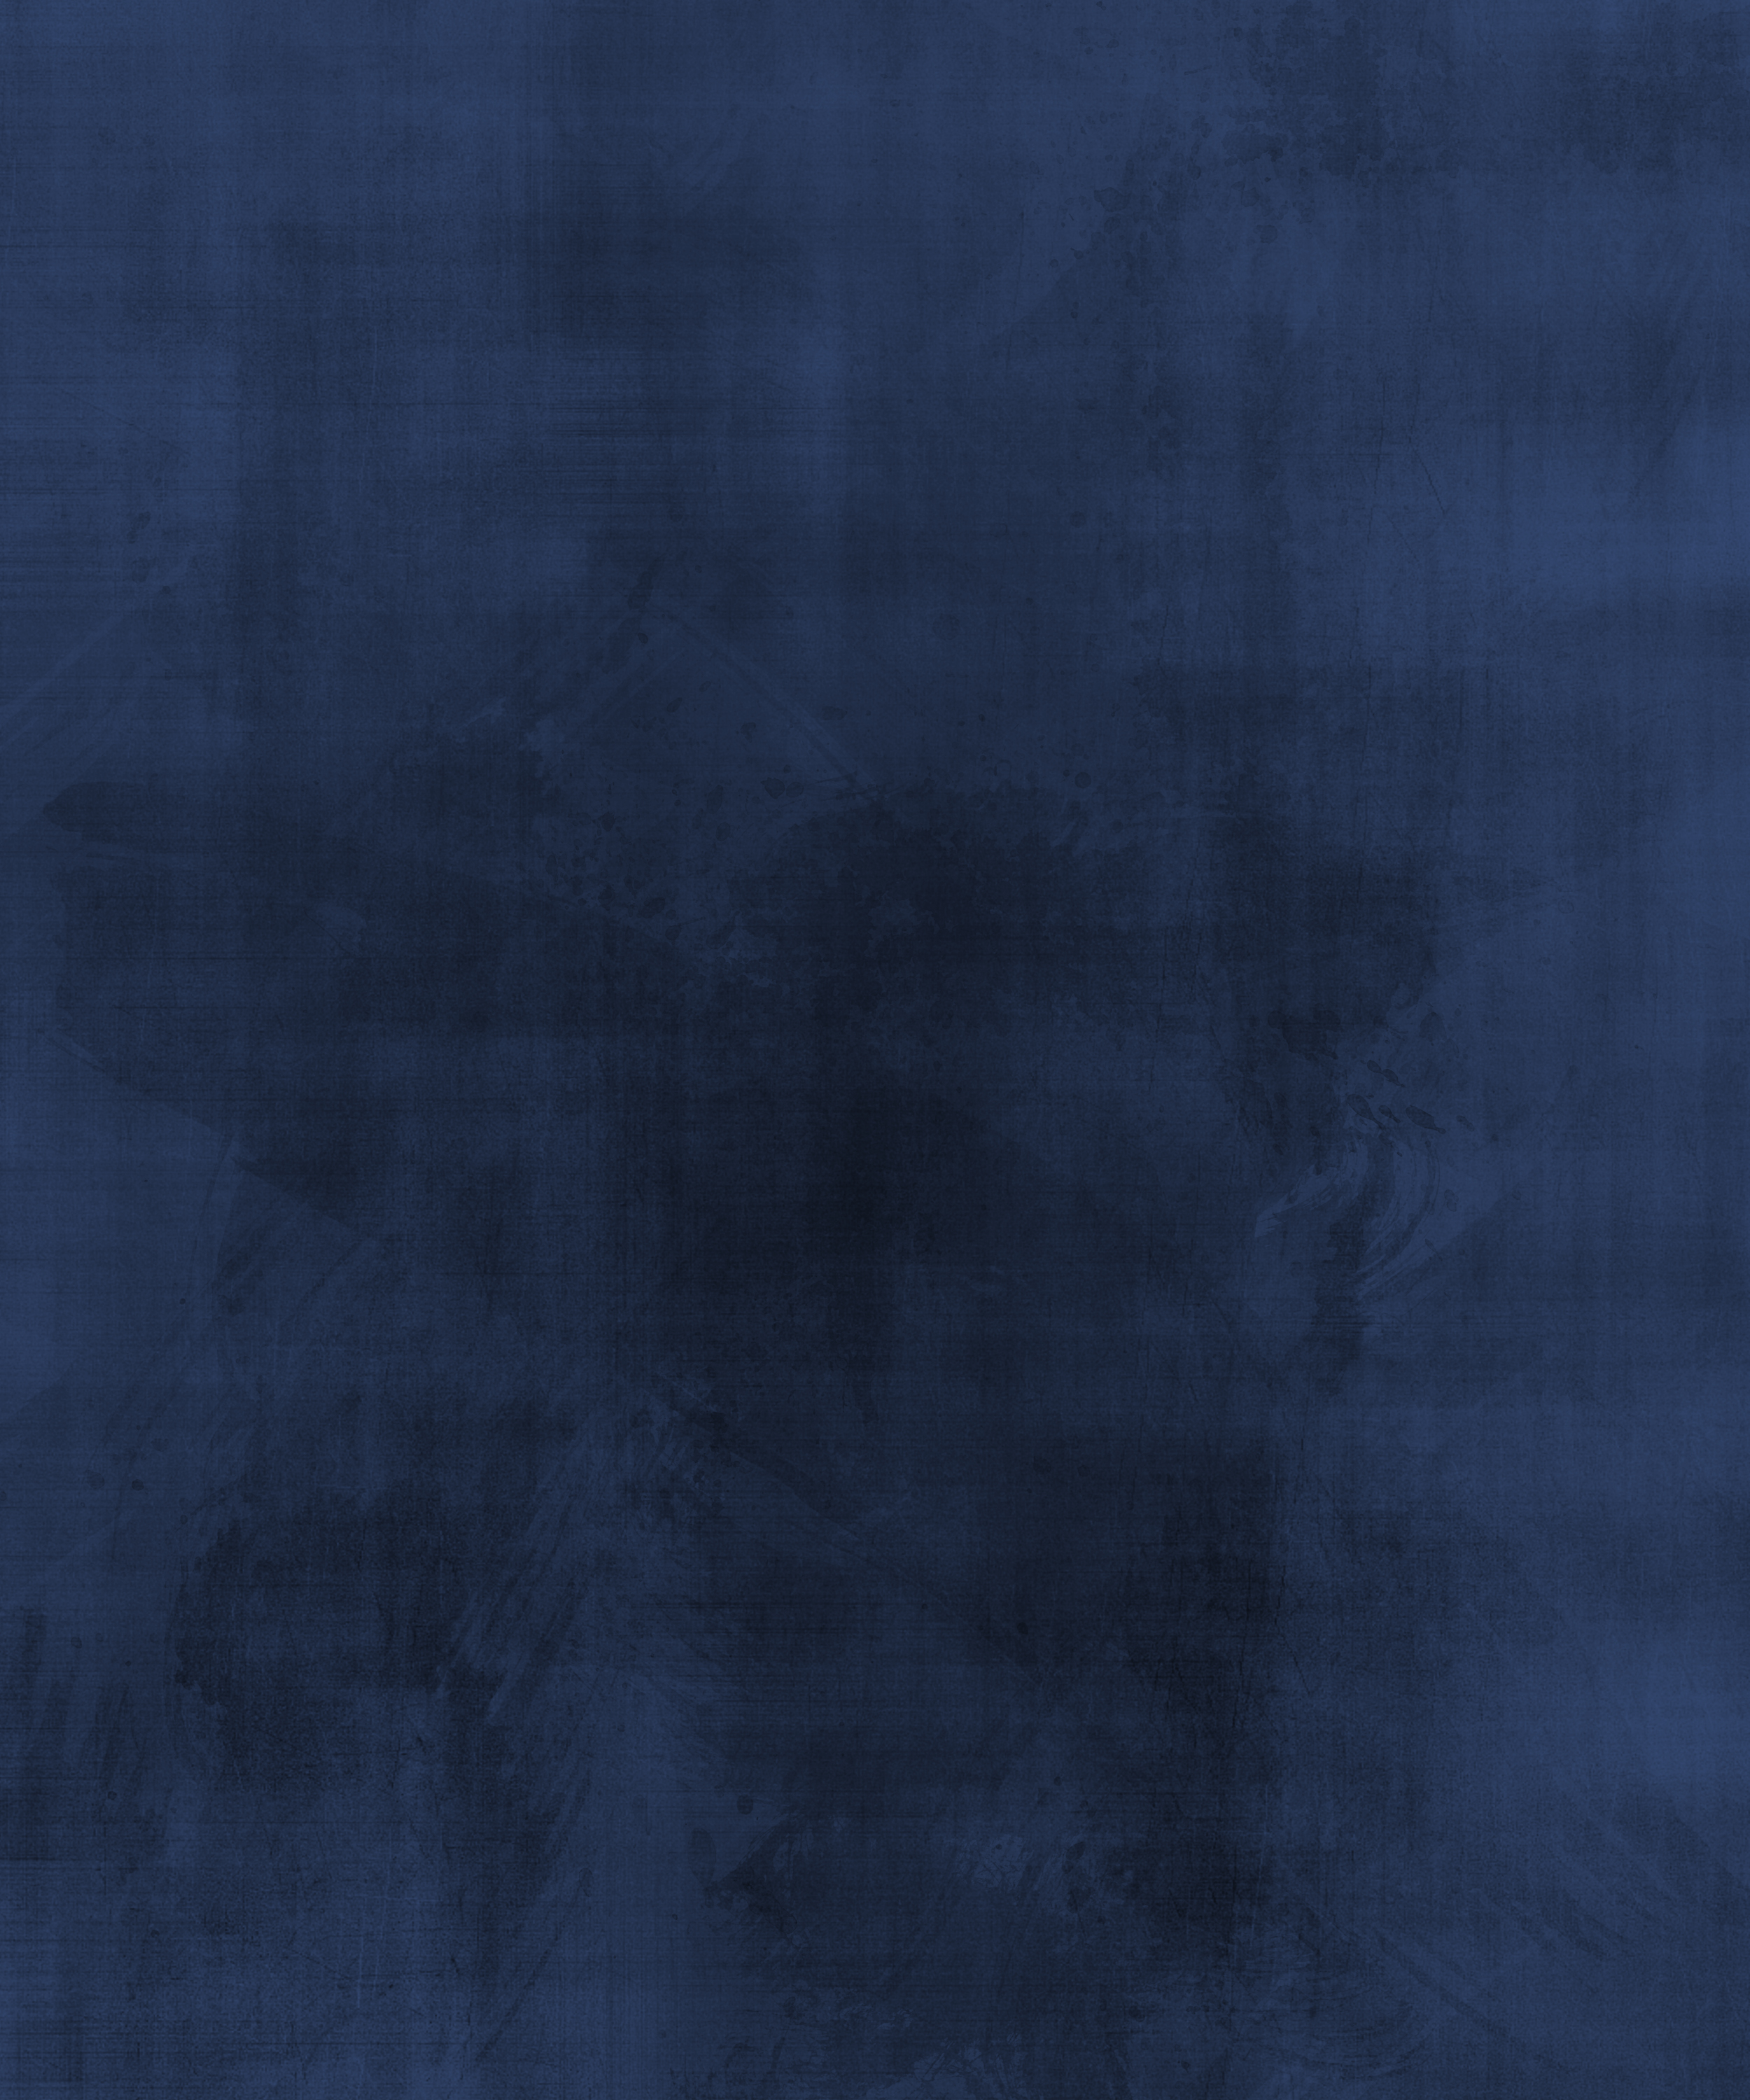 Blue grunge texture background image, free download